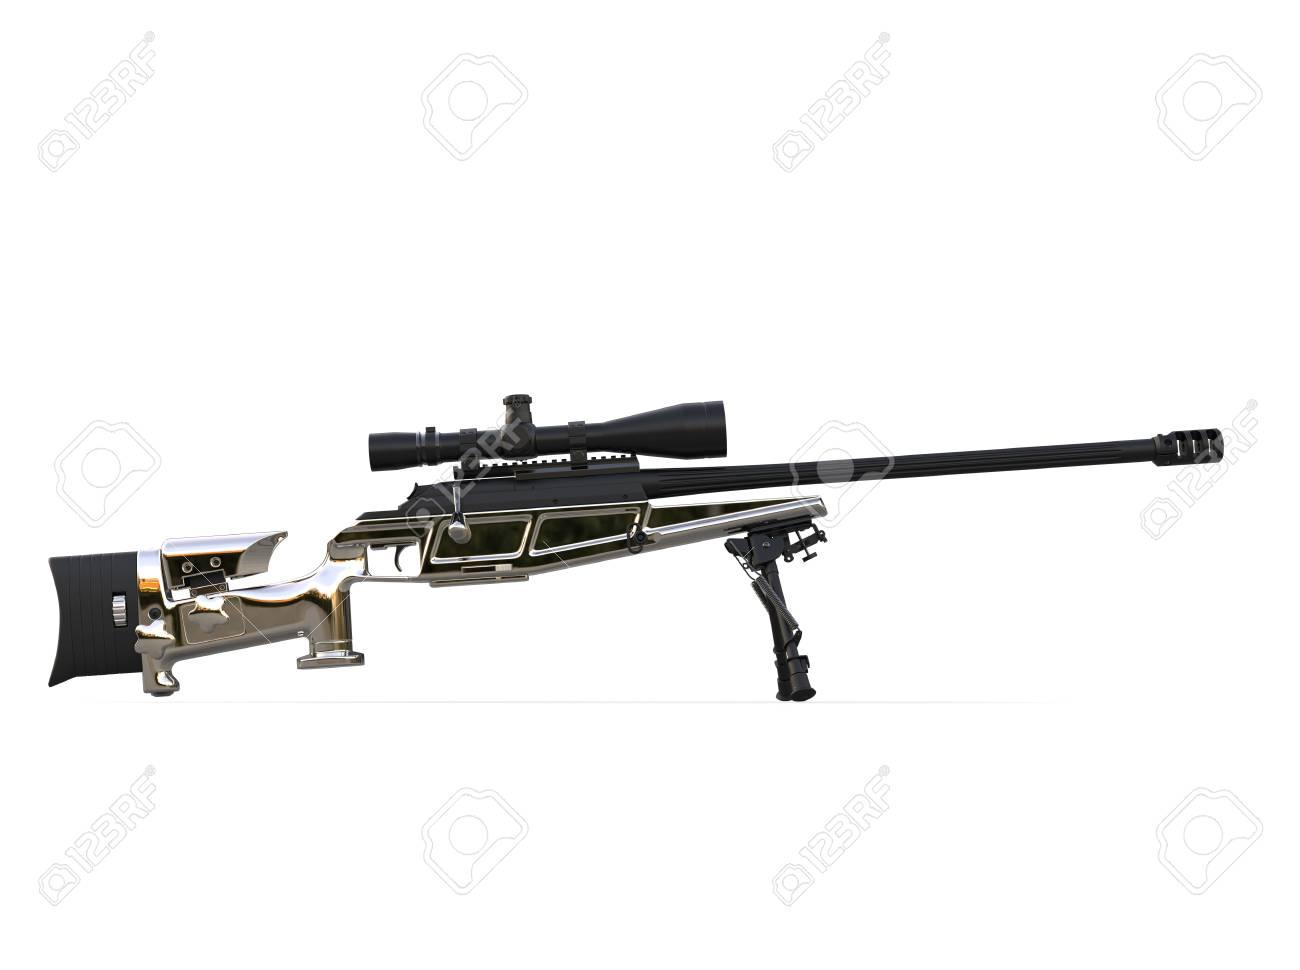 102871155-beautiful-chrome-modern-sniper-rifle-side-view.jpg